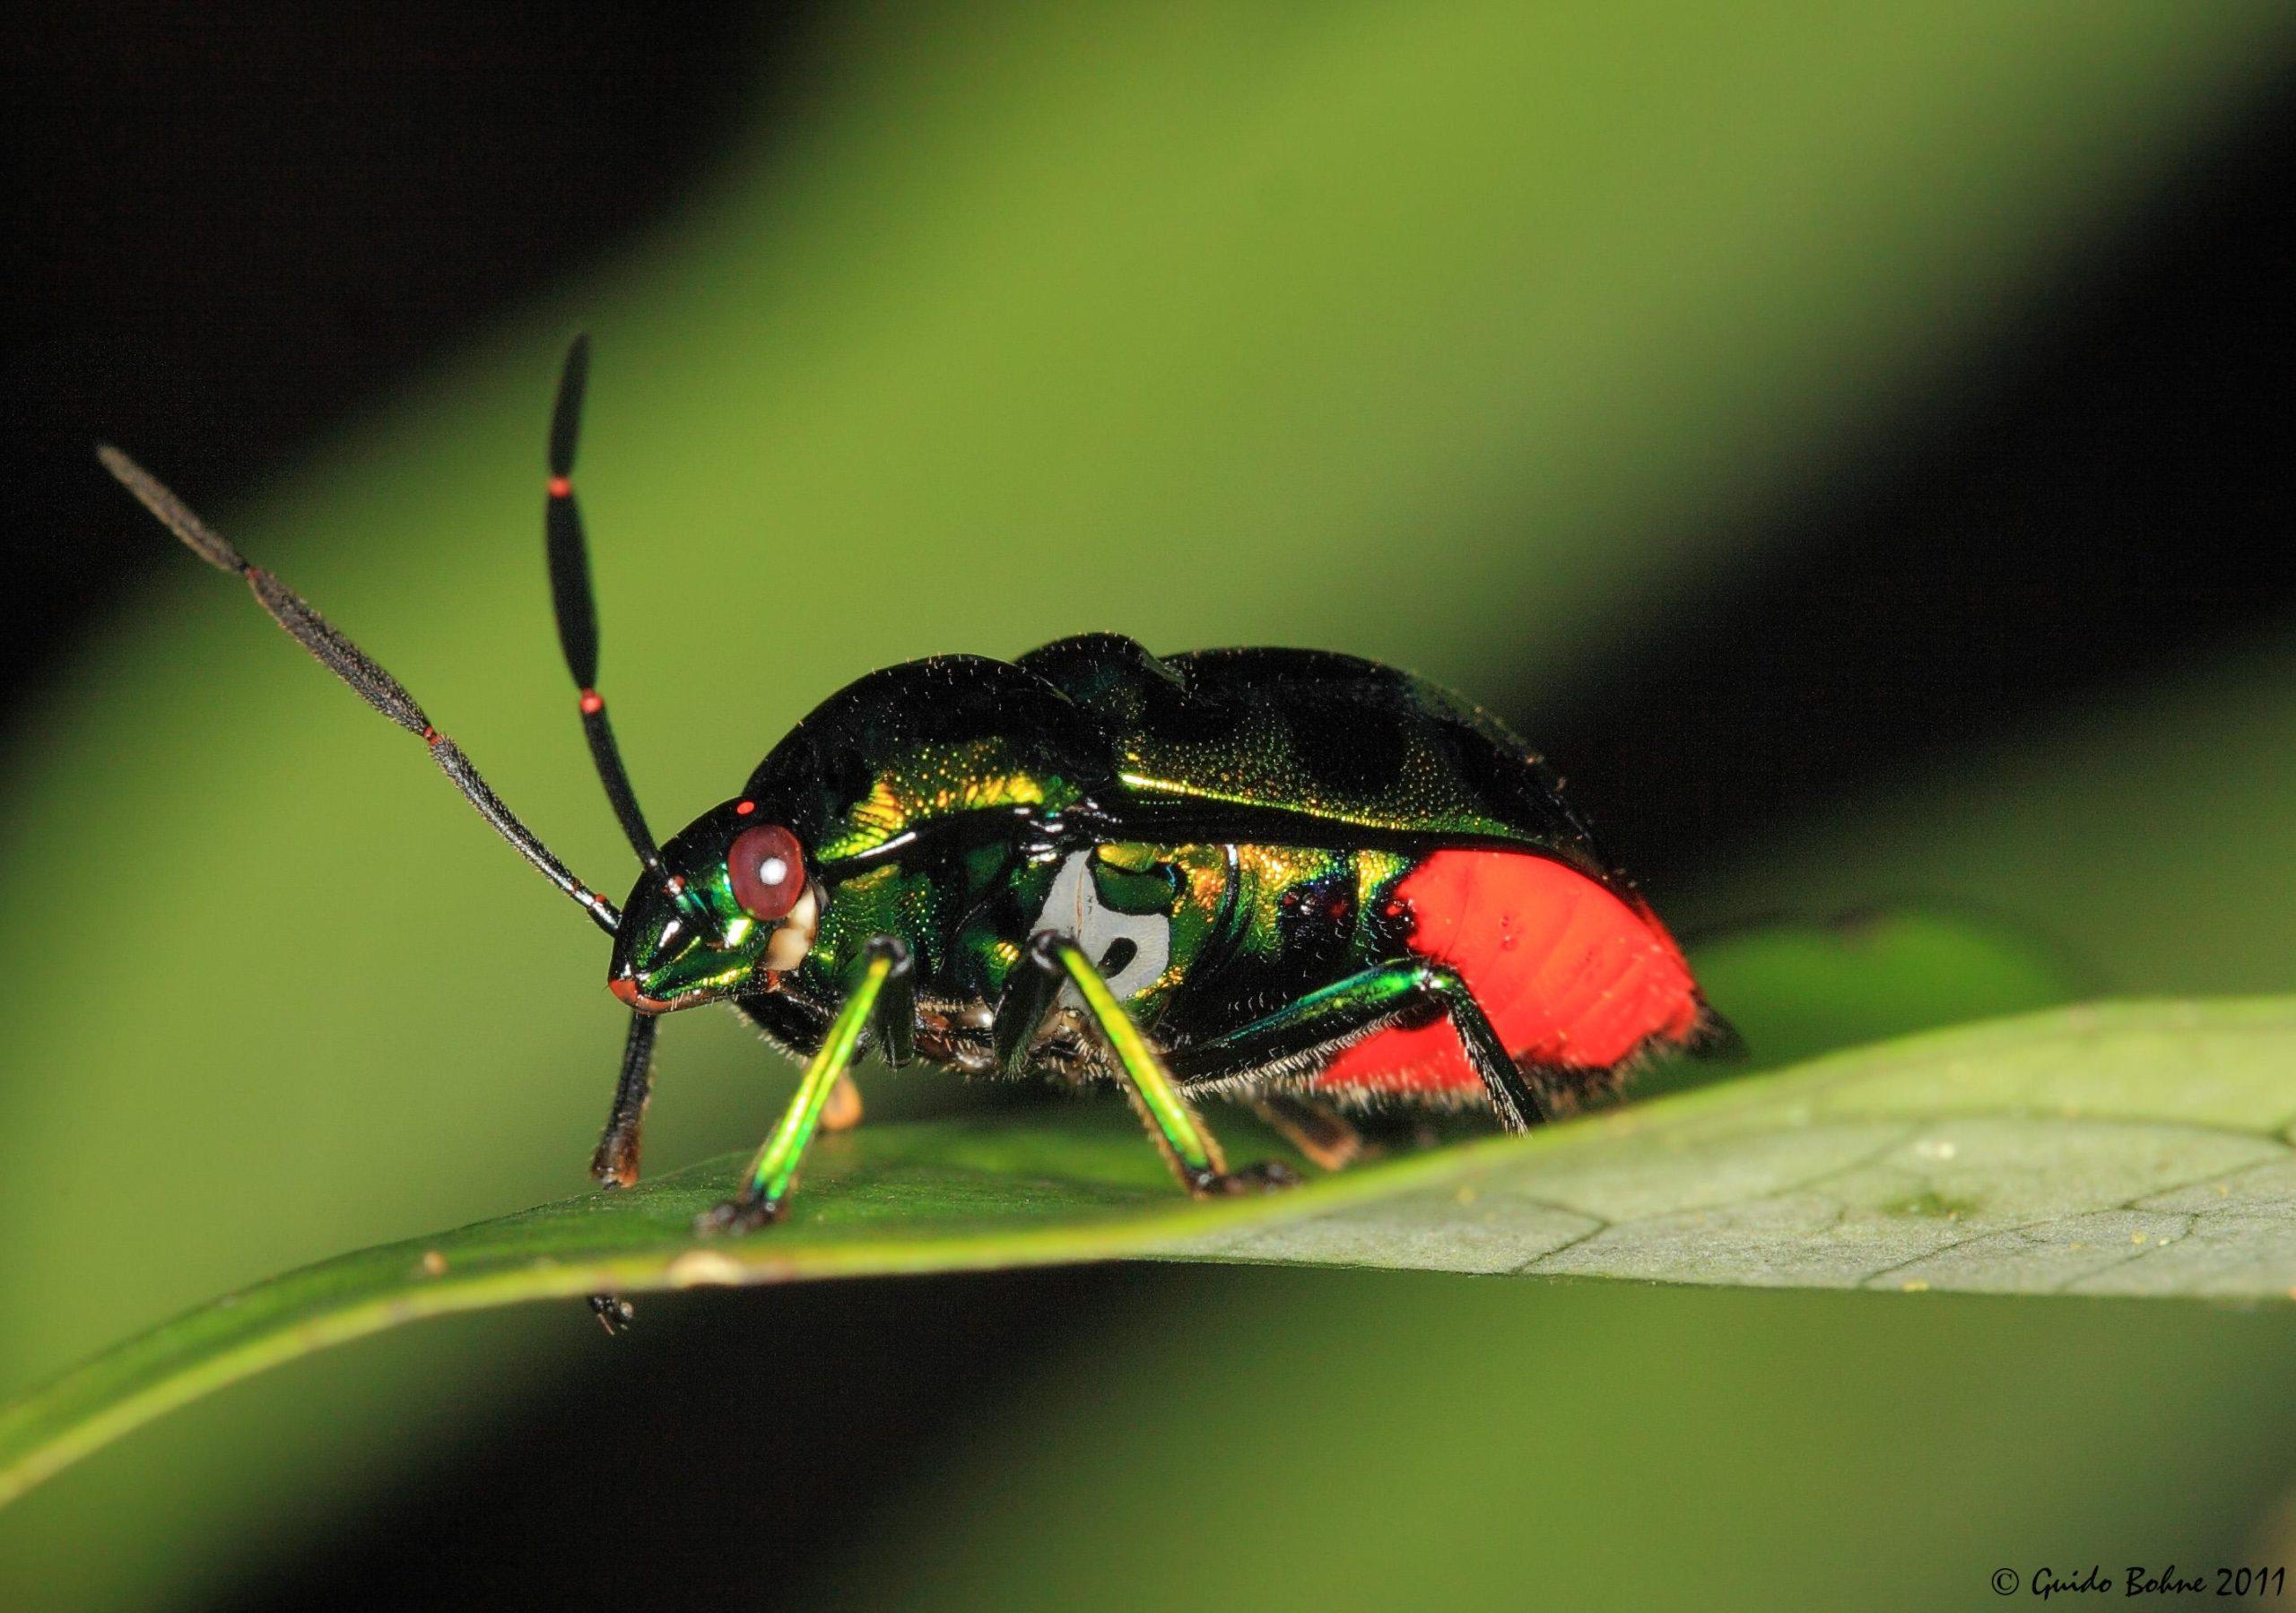 Photo of a Jewel bug